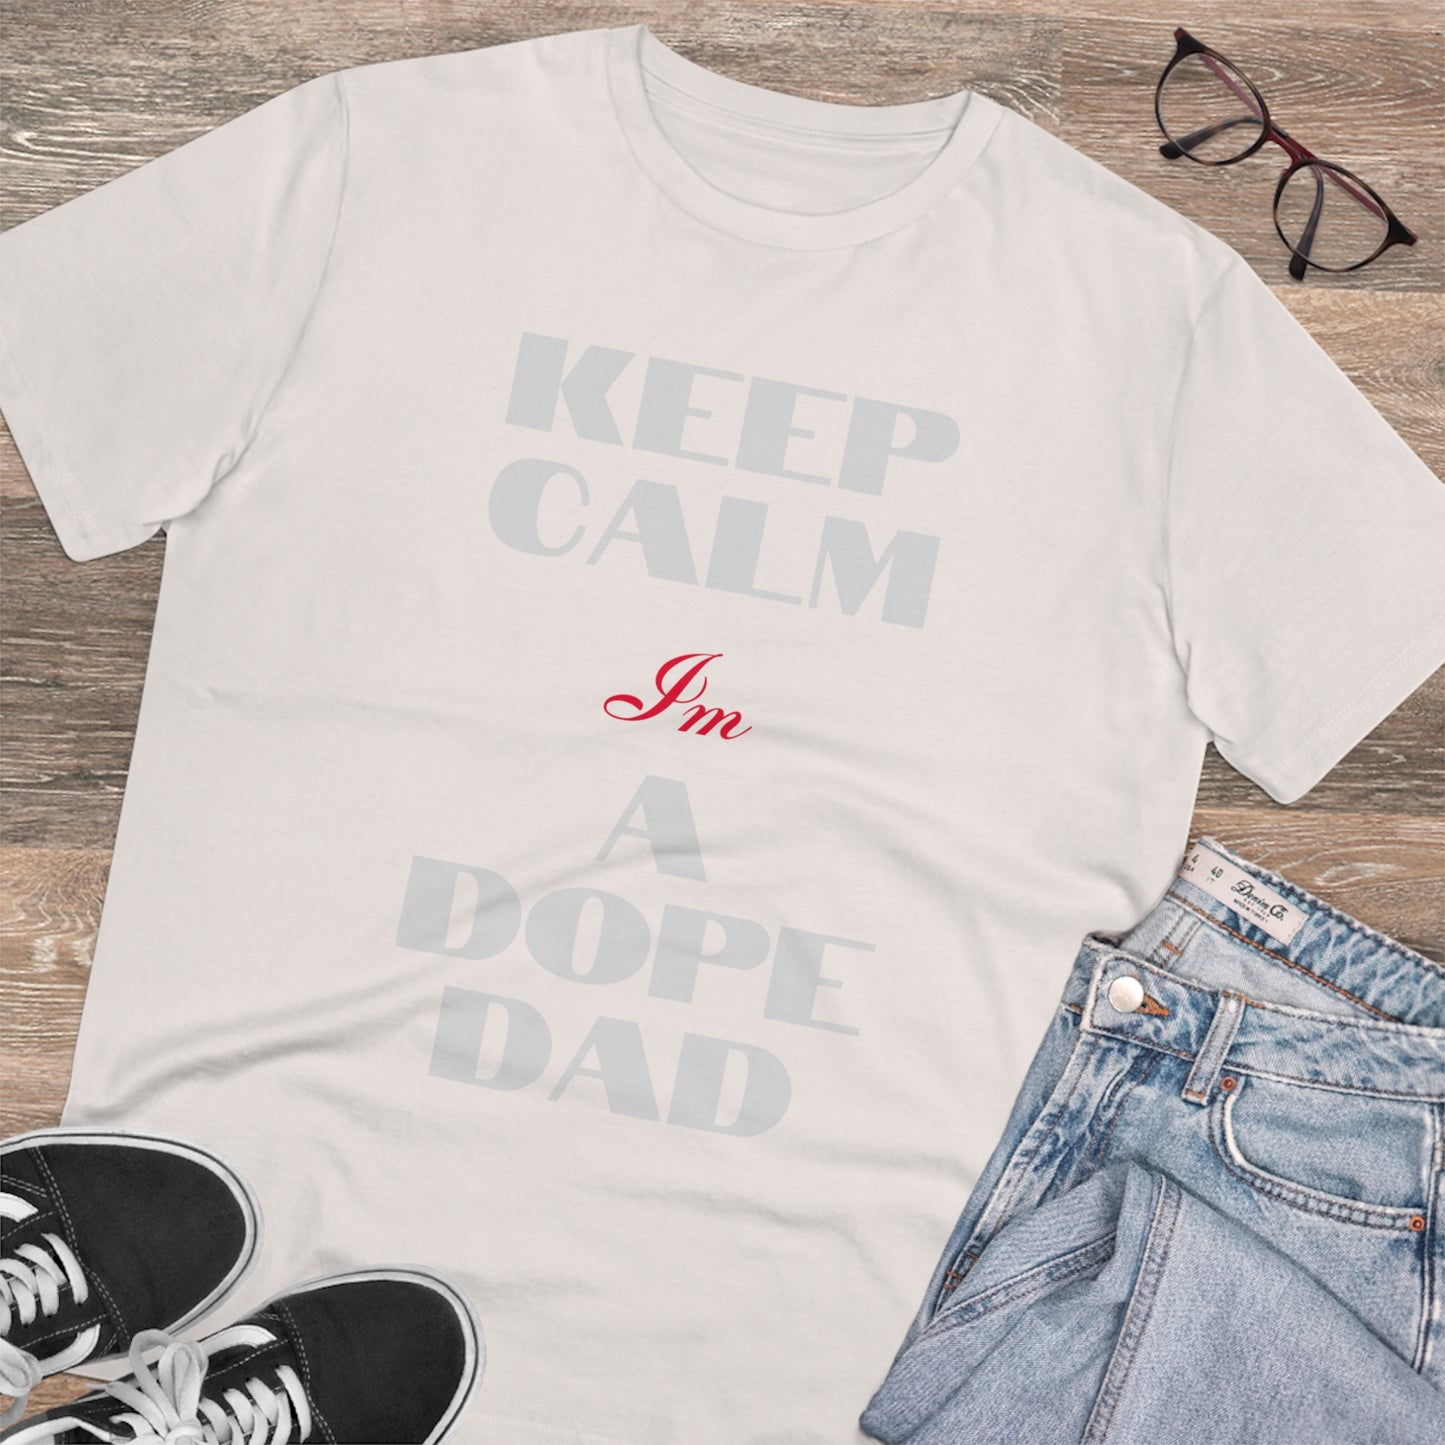 Keep Calm Im a Dope Dad Organic Unisex T-shirt